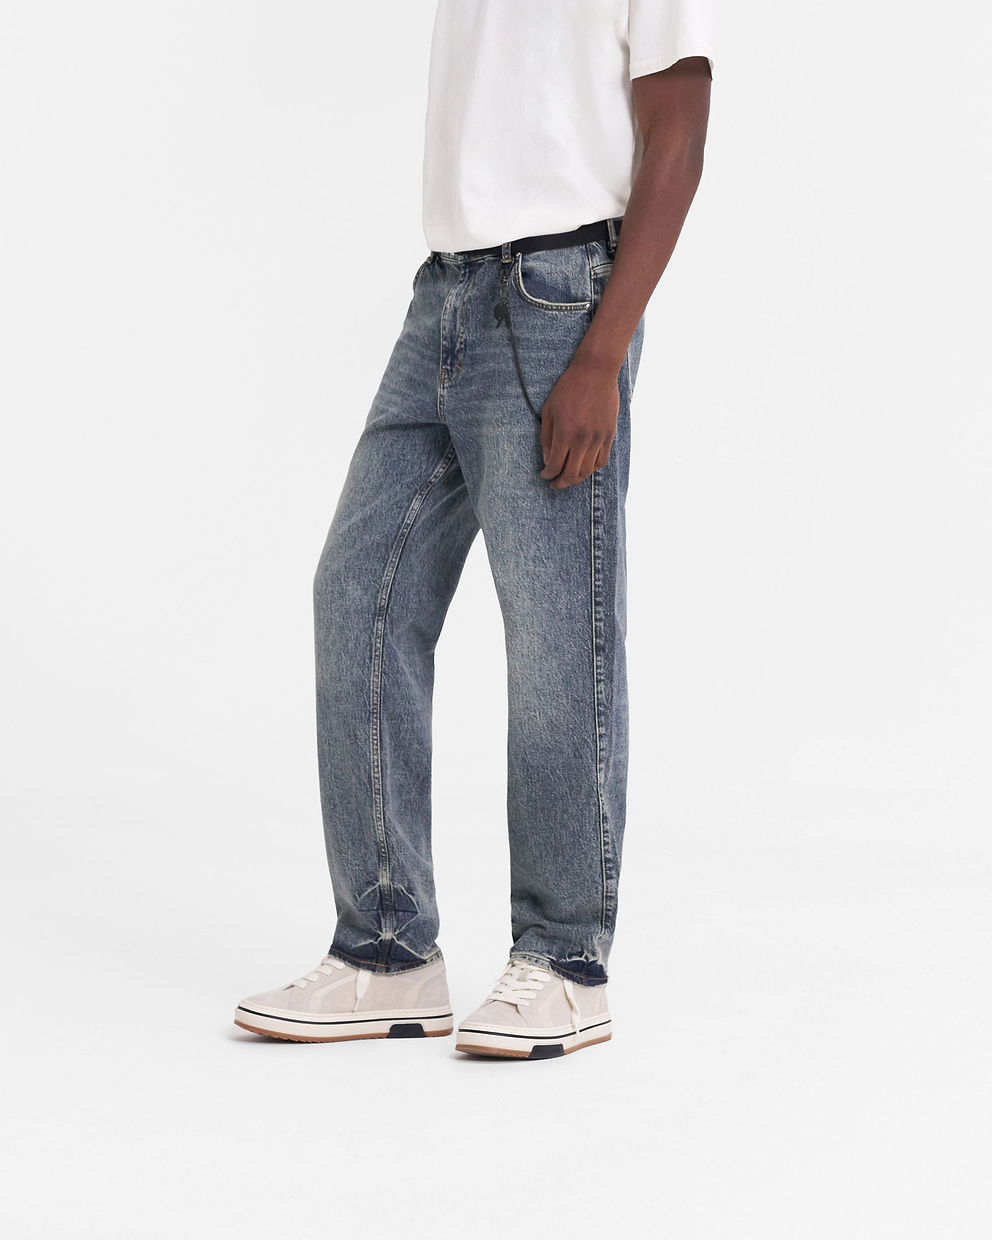 Earl Jeans, Jeans, Earl Jean Capris Womans Size 4p